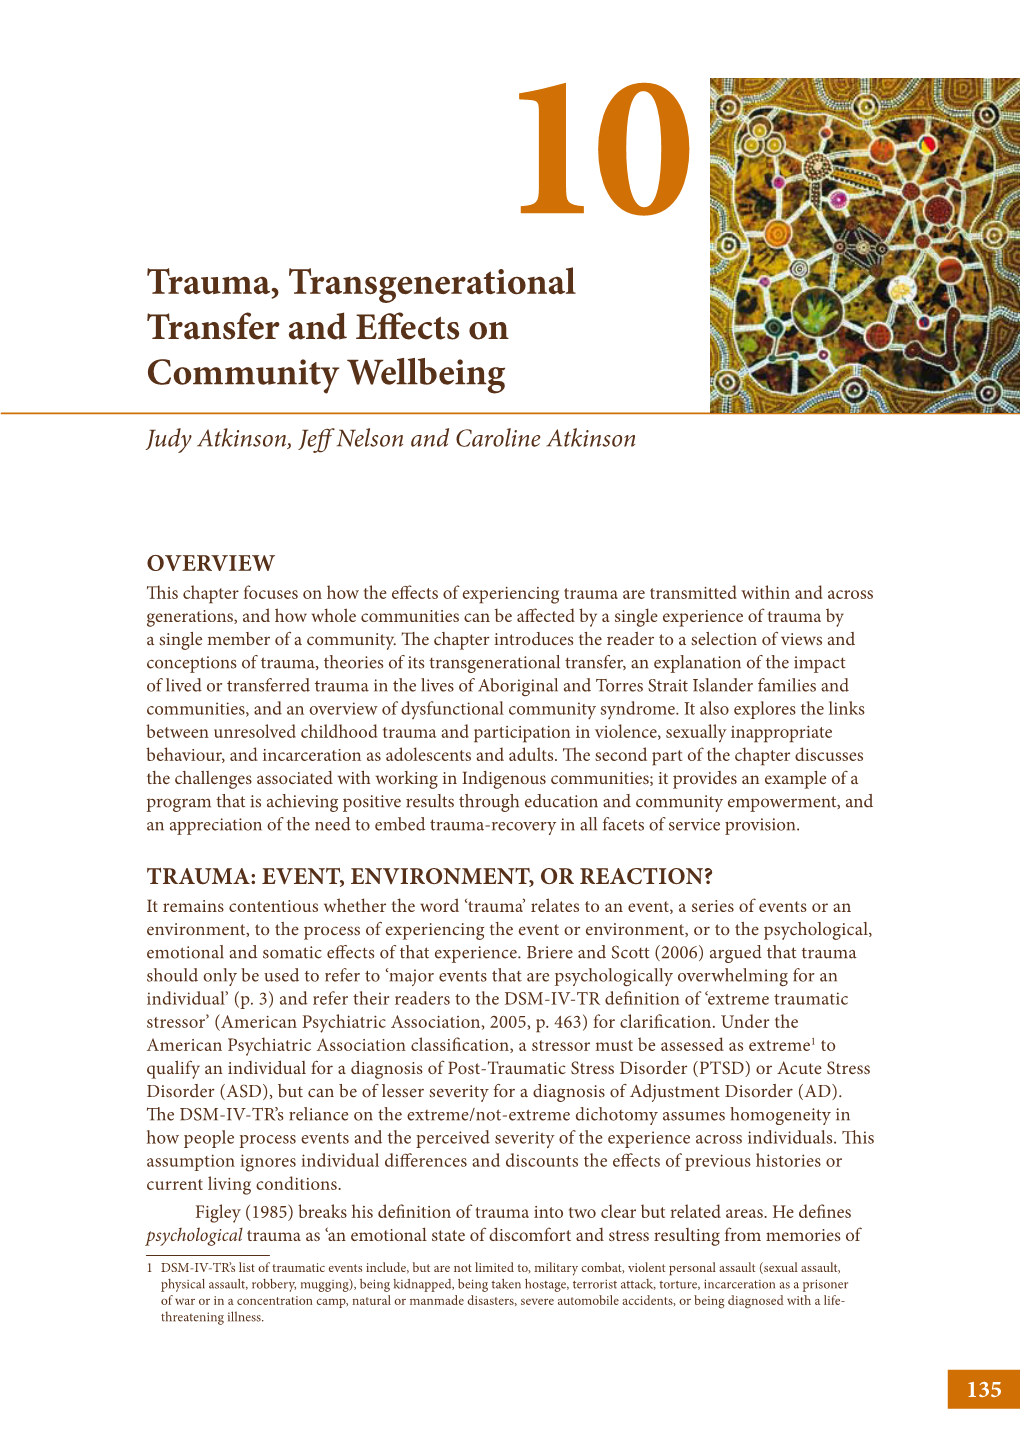 Trauma, Transgenerational Transfer and Effects on Community Wellbeing